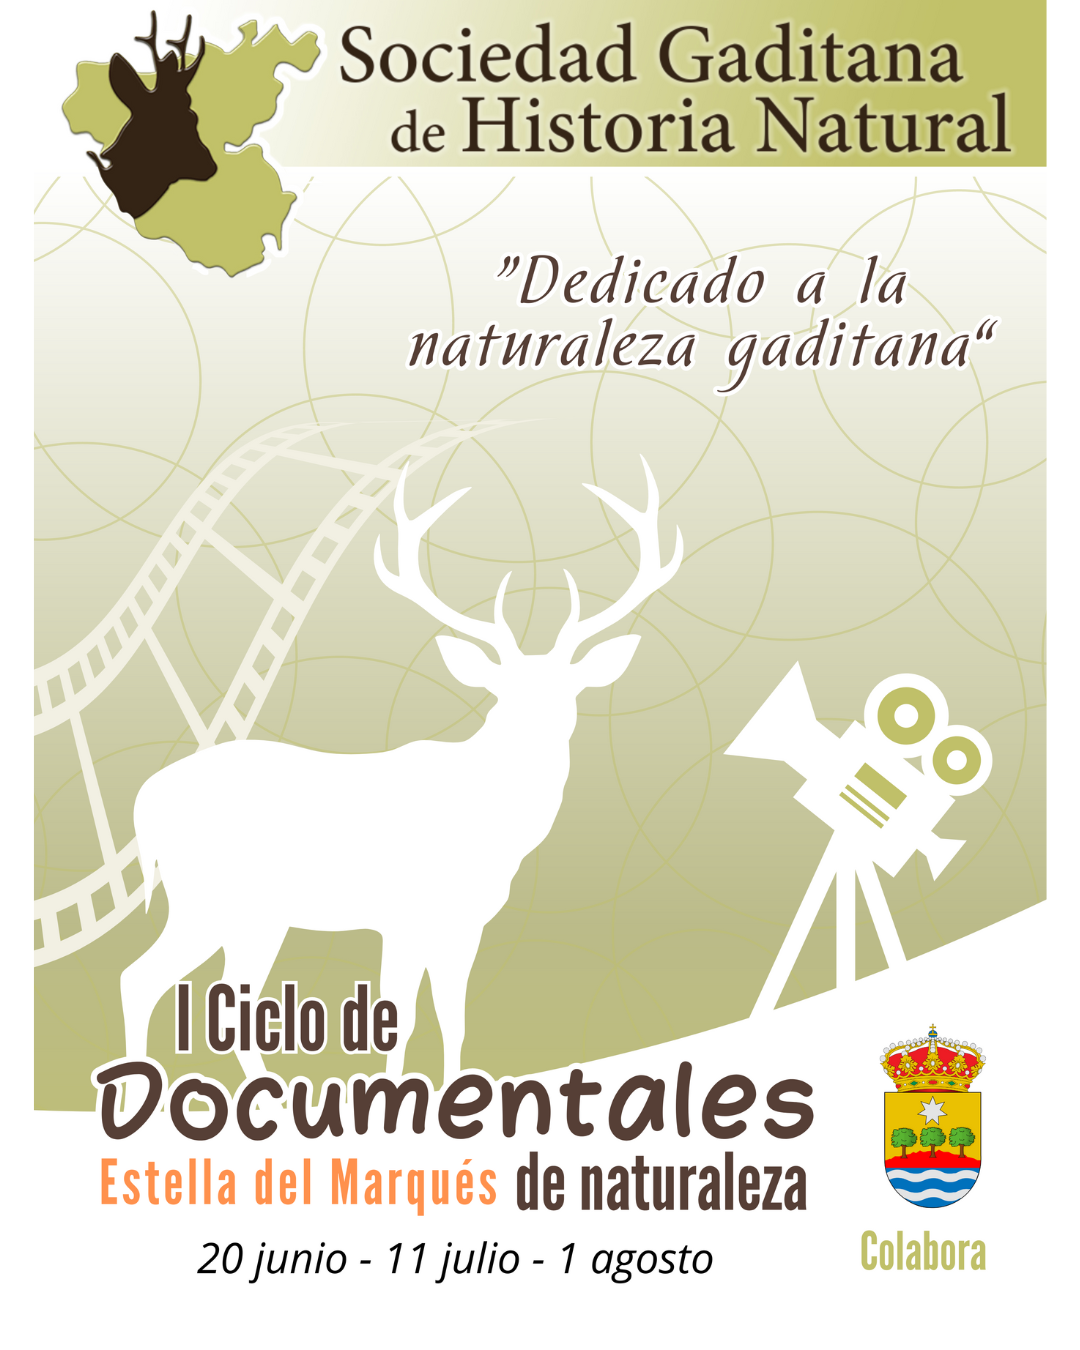 La Sociedad Gaditana de Historia Natural lanza el I Ciclo de Documentales de Naturaleza en Estella del Marqués